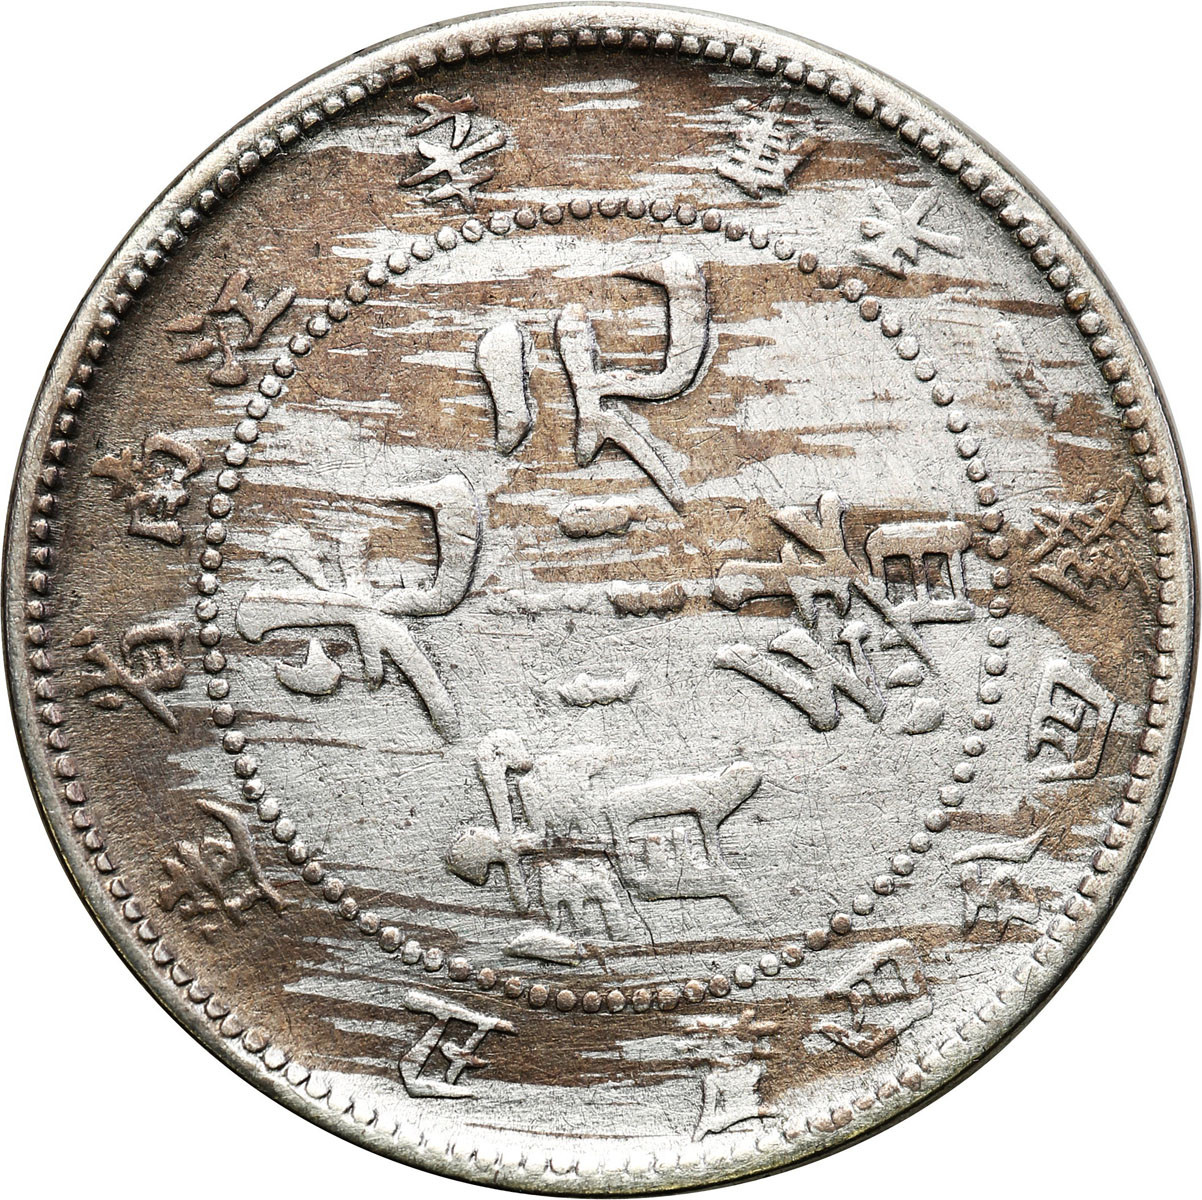 Chiny. Kiangnan. 1 Mace 4.4 Candareens (20 centów) (1901) - RZADSZE